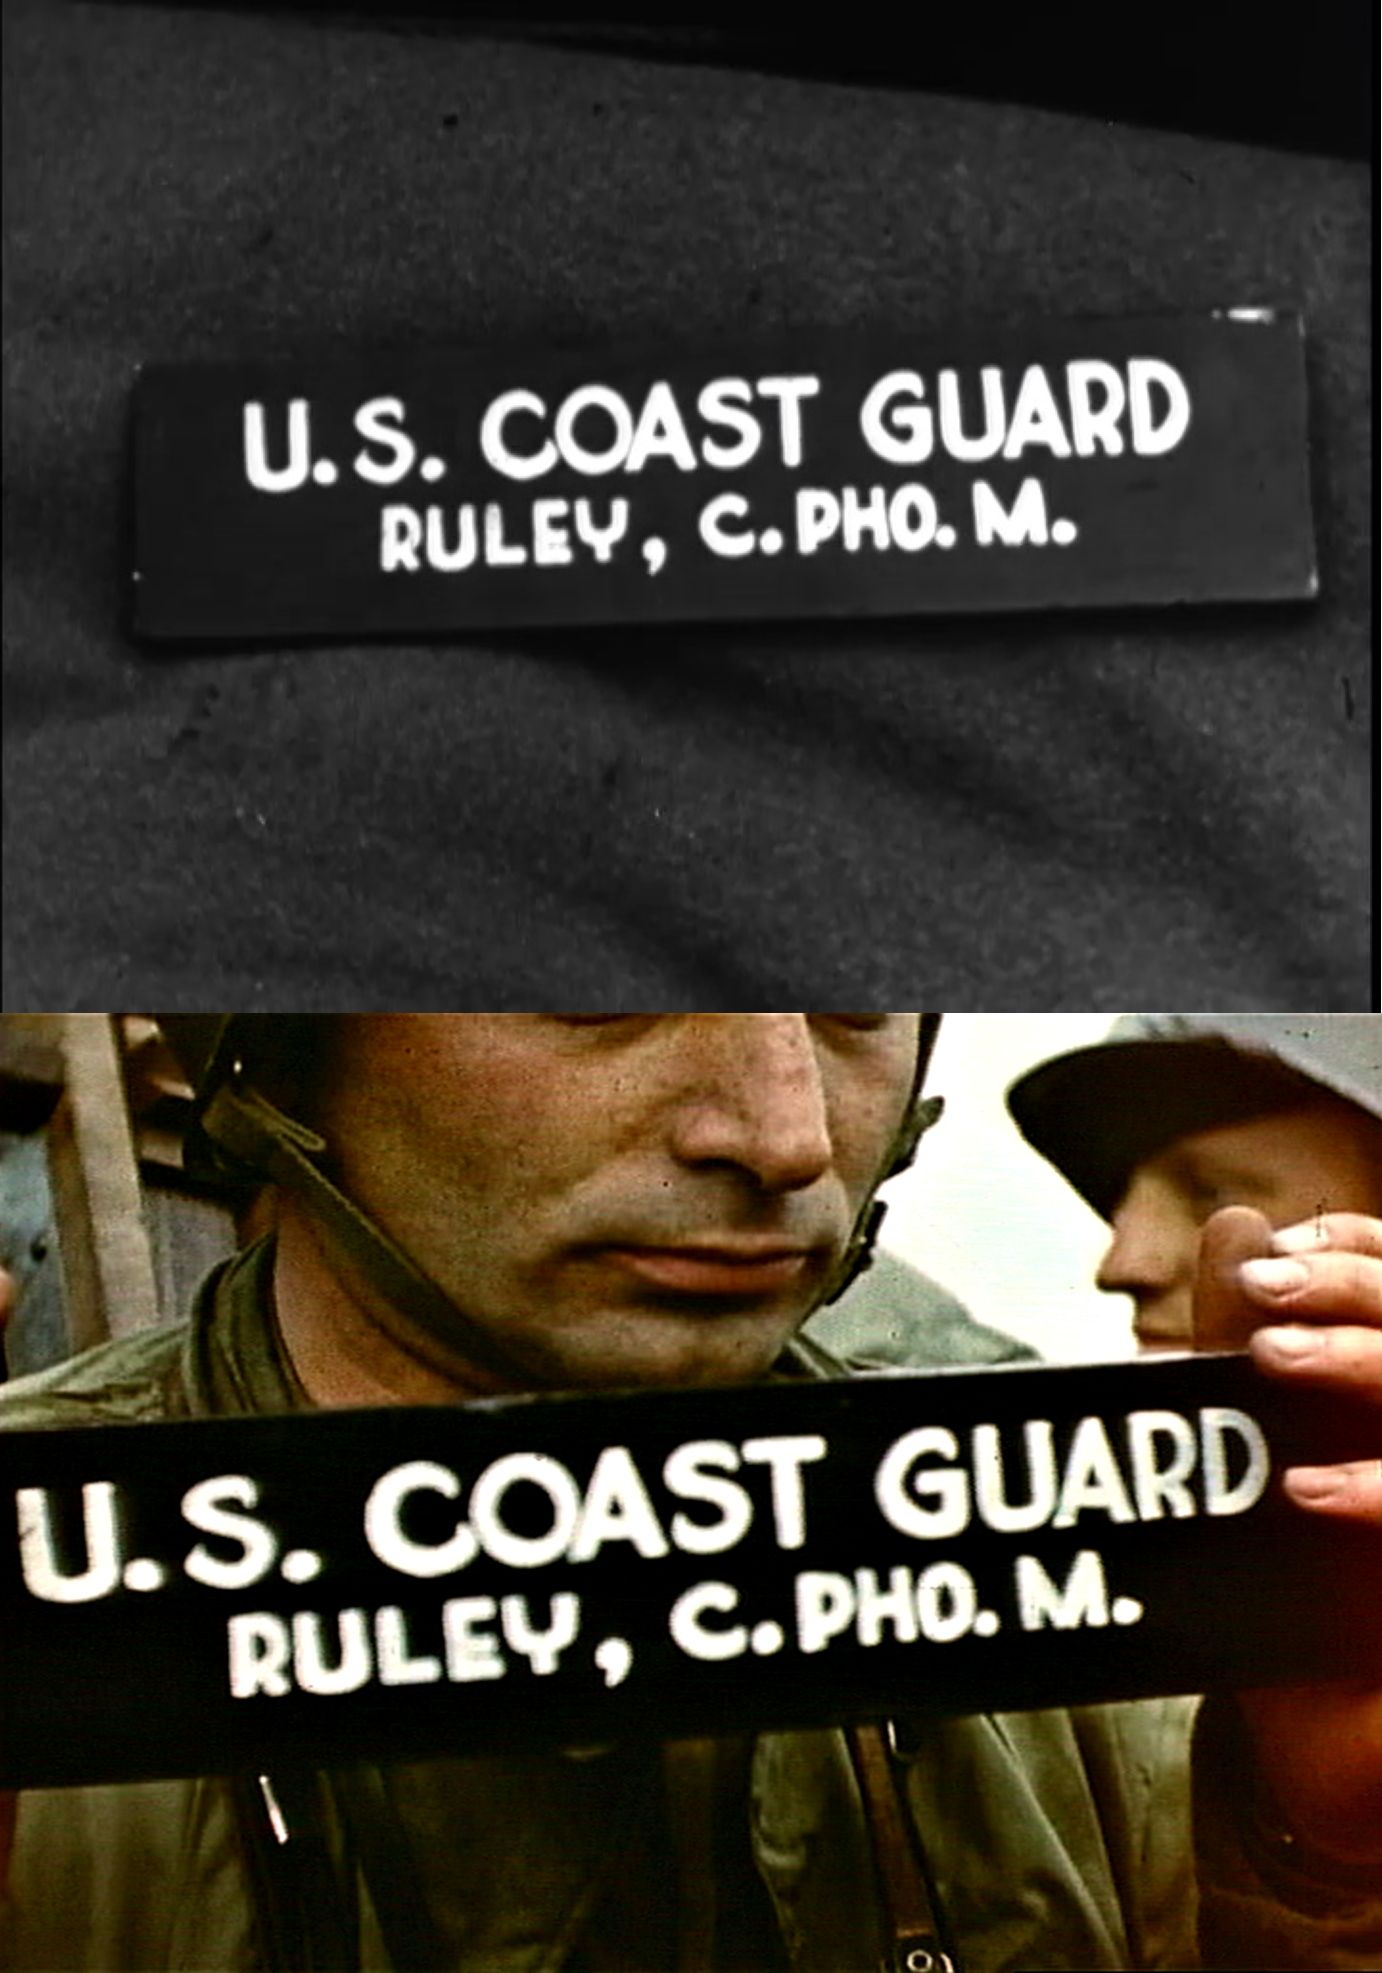 08 - (top) Ruley Slate, film 428-NPC-15707 at timestamp 0:07 / (bottom) Ruley Slate held by Robert Capa, color film 428-NPC-10782 at timestamp 5:15.